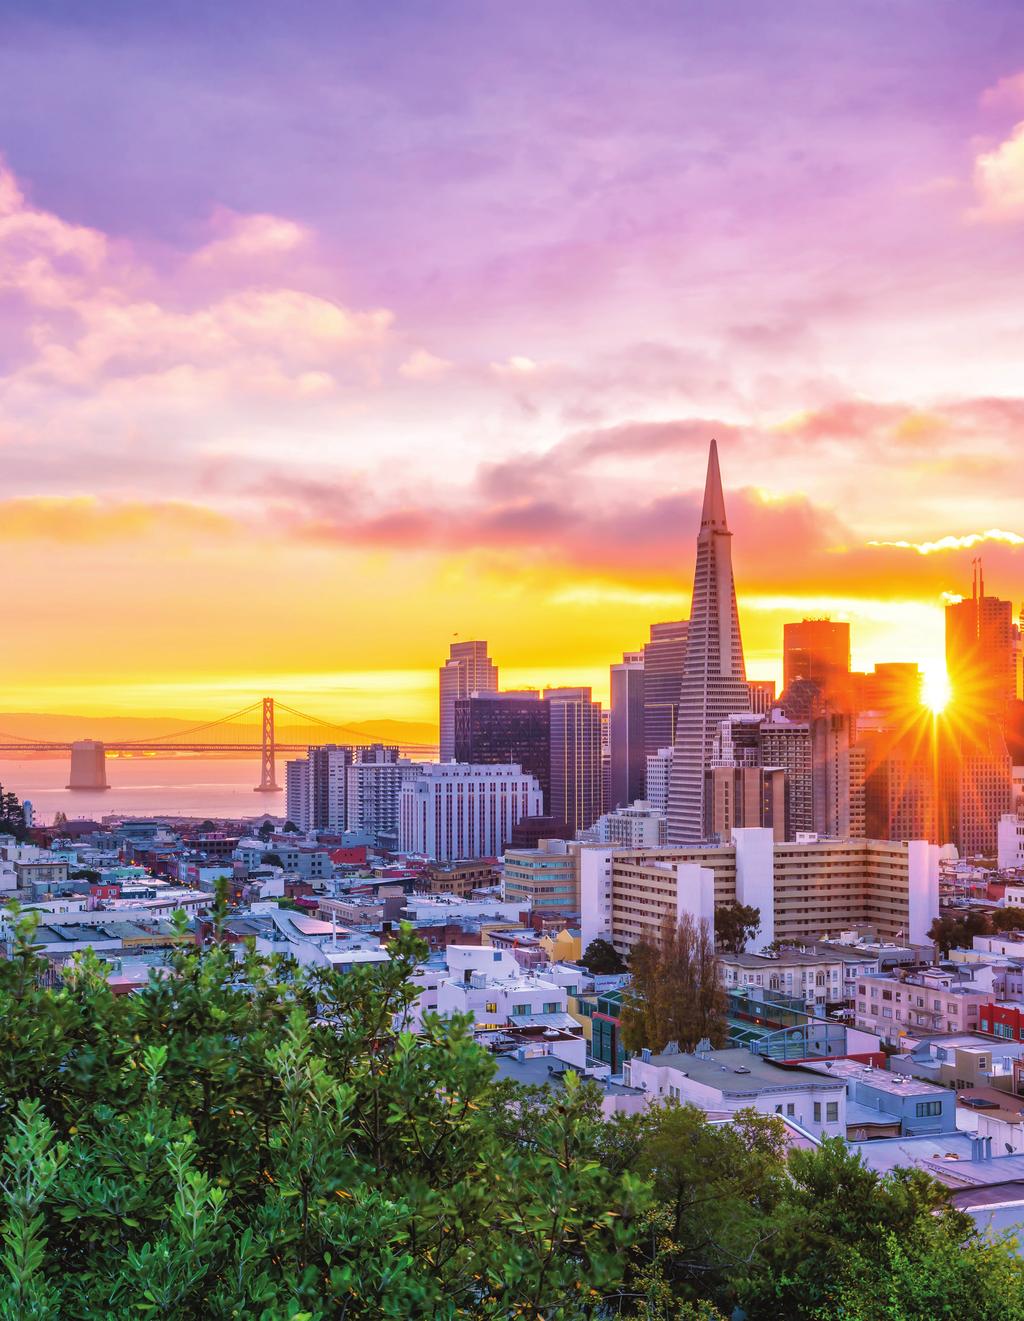 San Francisco Bay Area to 2020 Marin, San